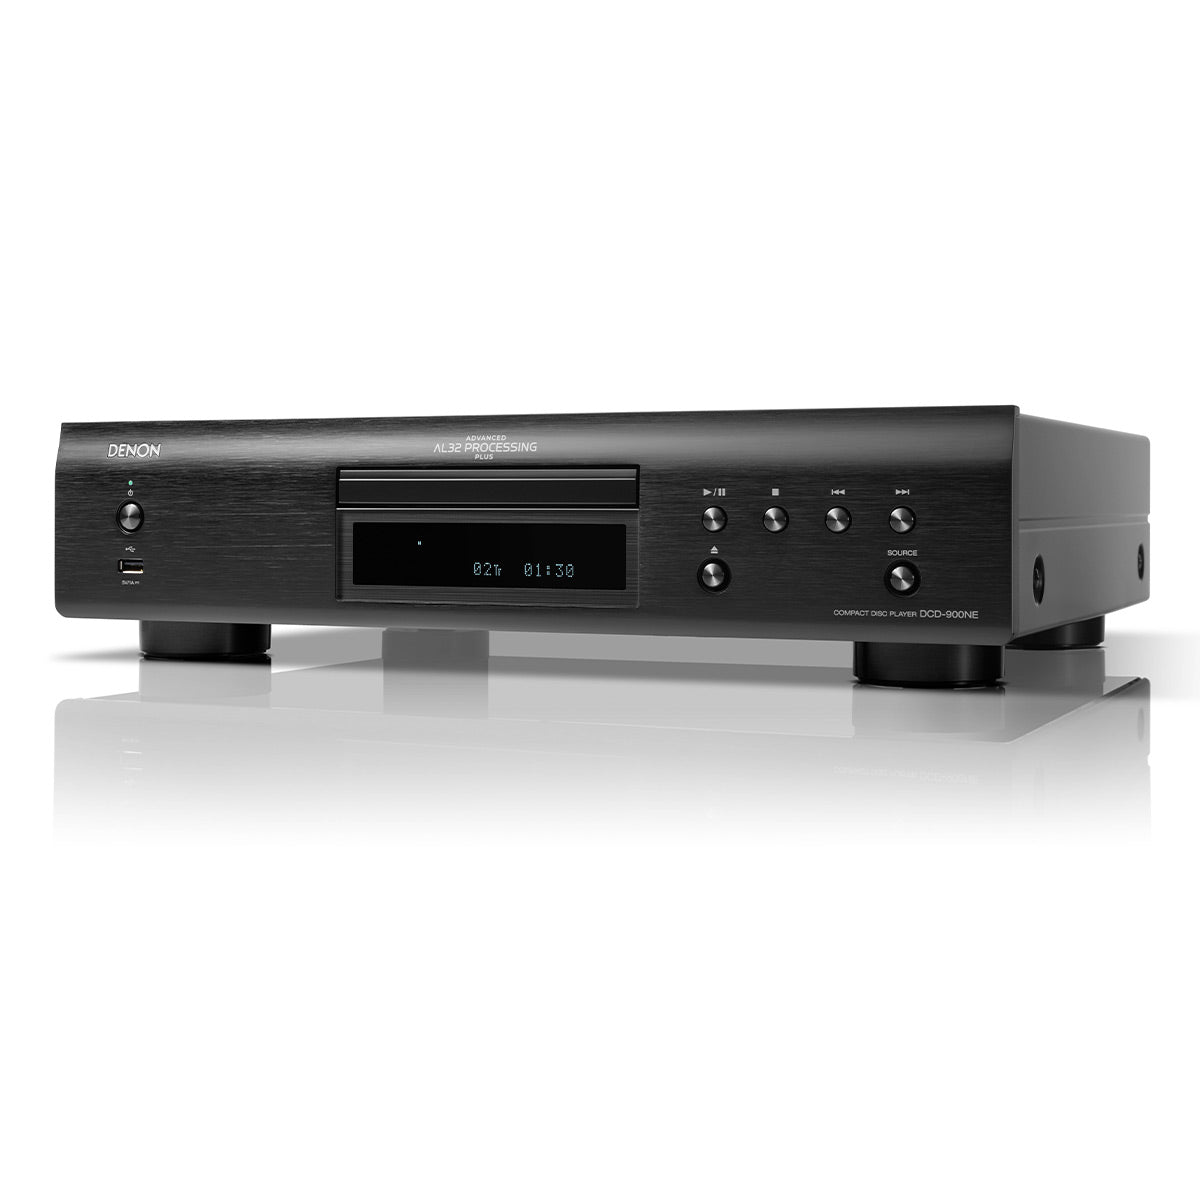 Denon DCD-900NE CD Player and PMA-900HNE Integrated Network Amplifier (Black)